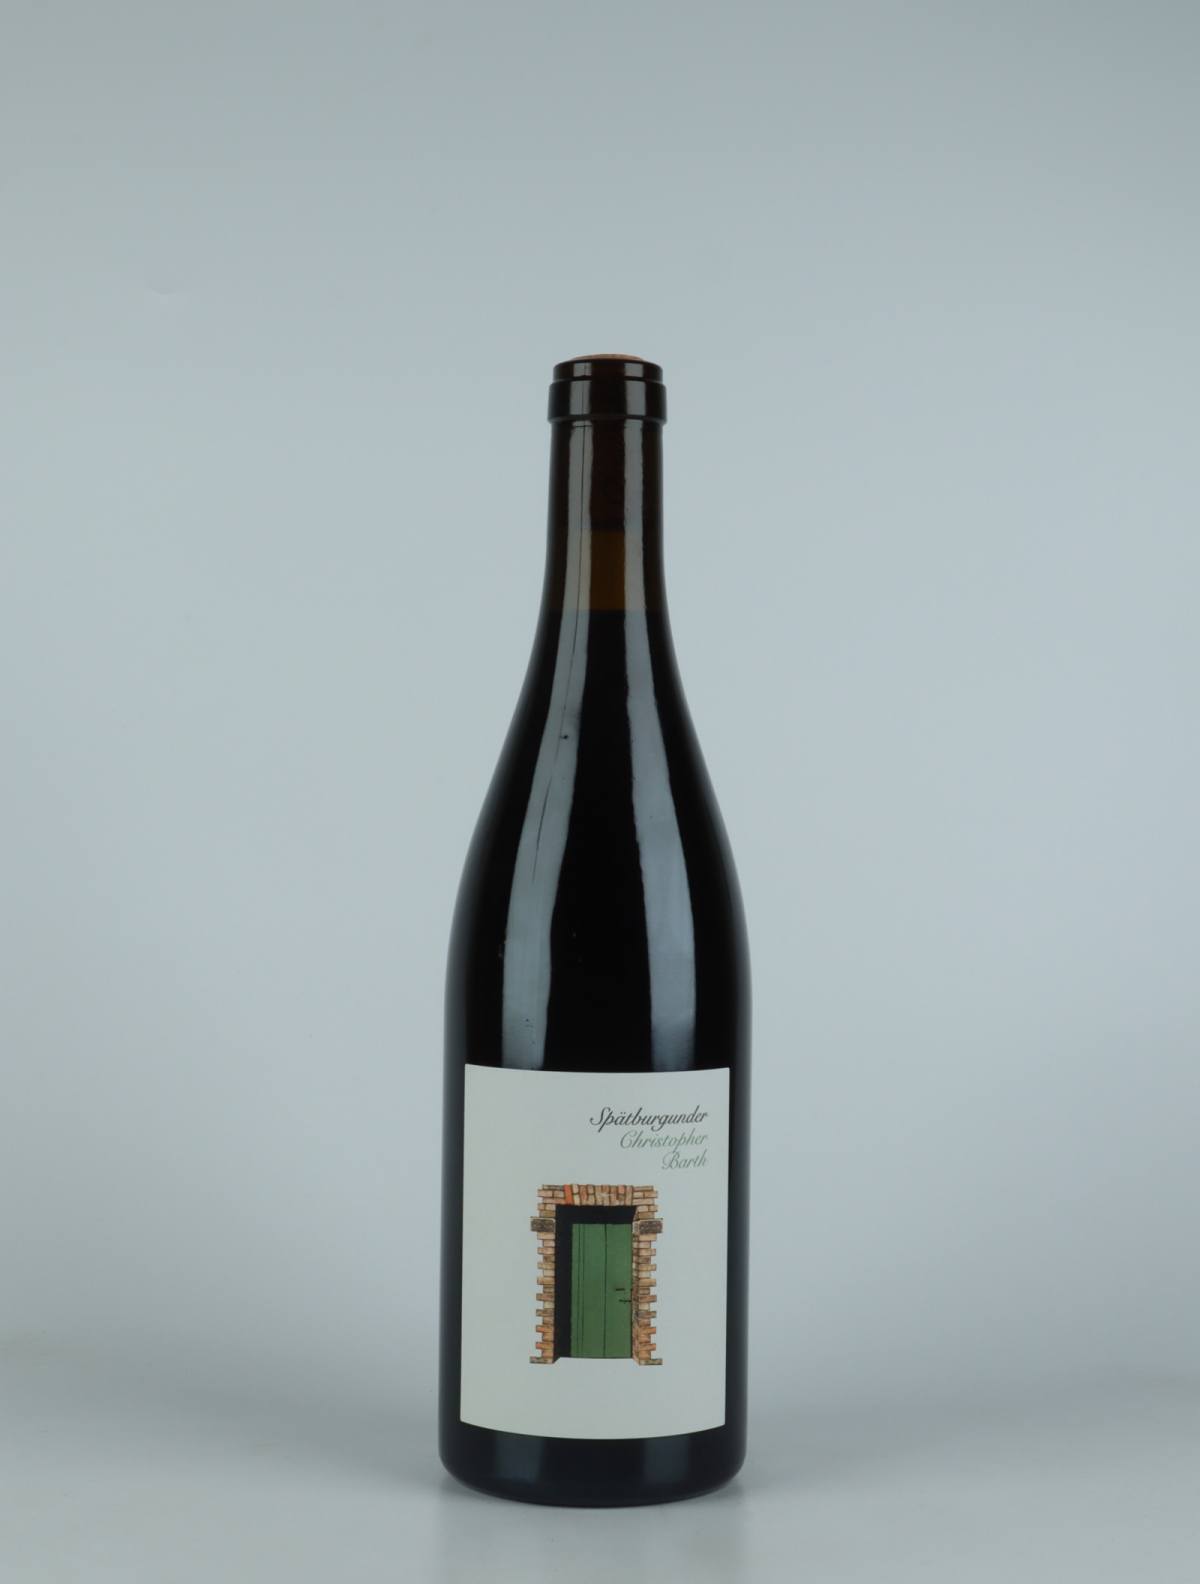 A bottle N.V. Spätburgunder (18/19/20) Red wine from Christopher Barth, Rheinhessen in Germany